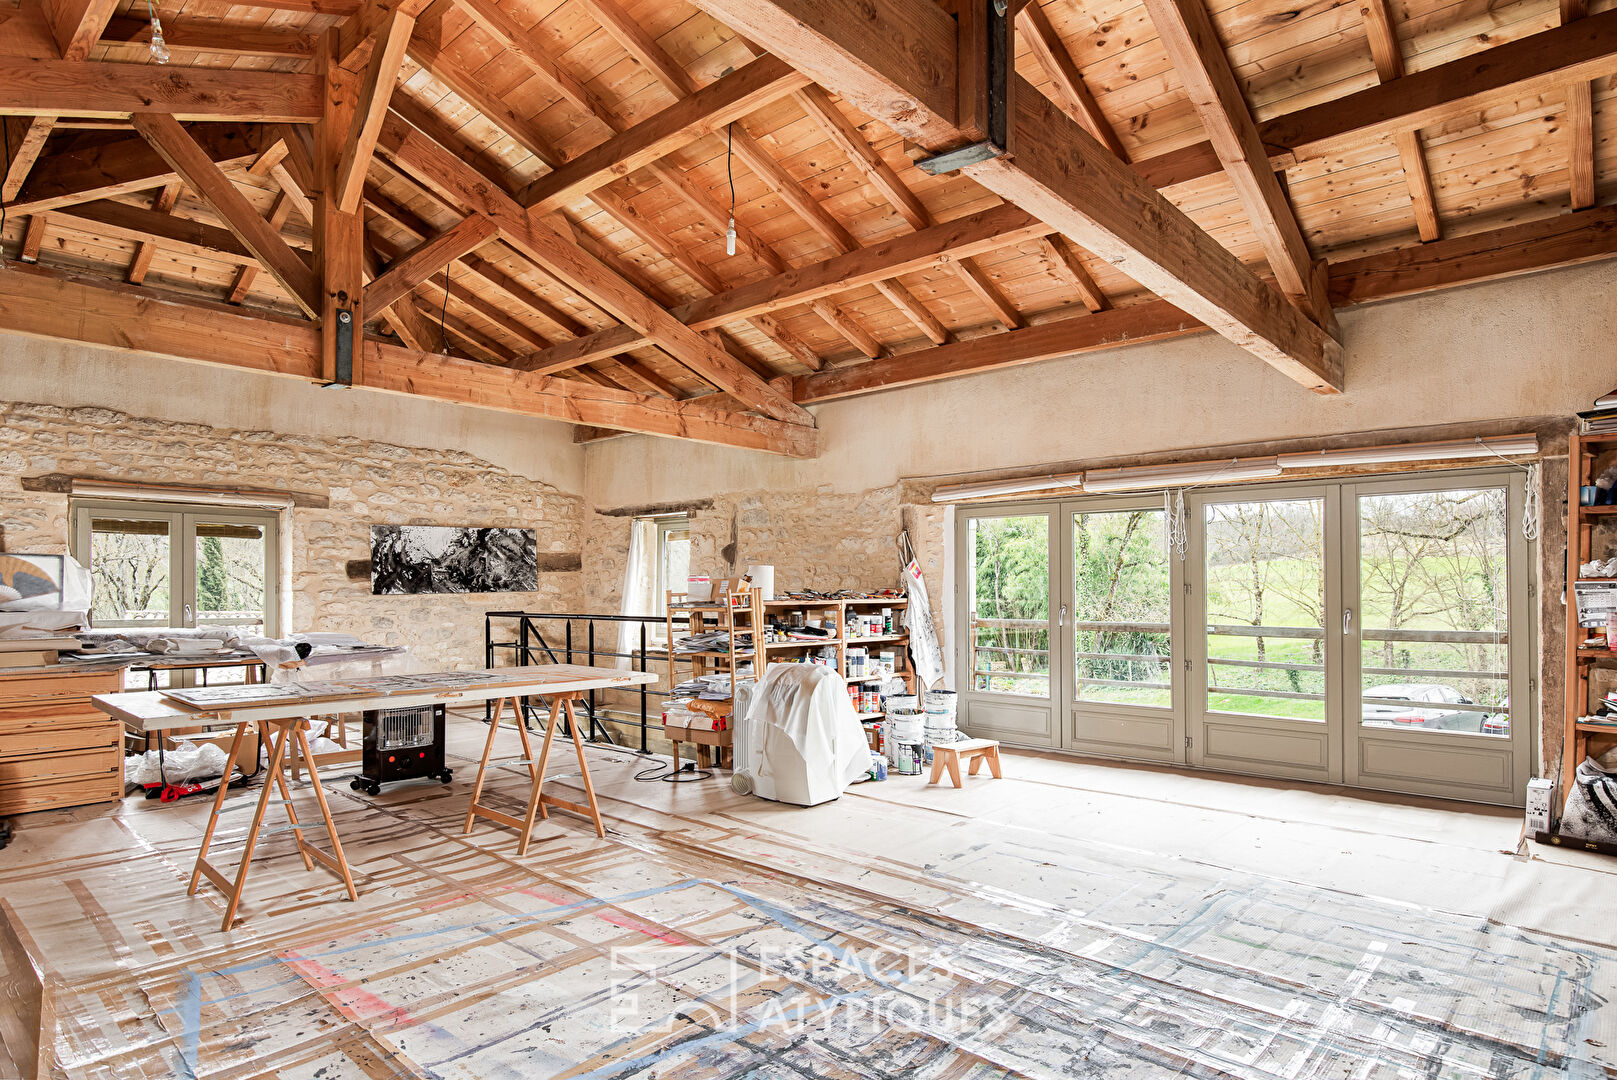 Loft / artist’s studio in a hamlet